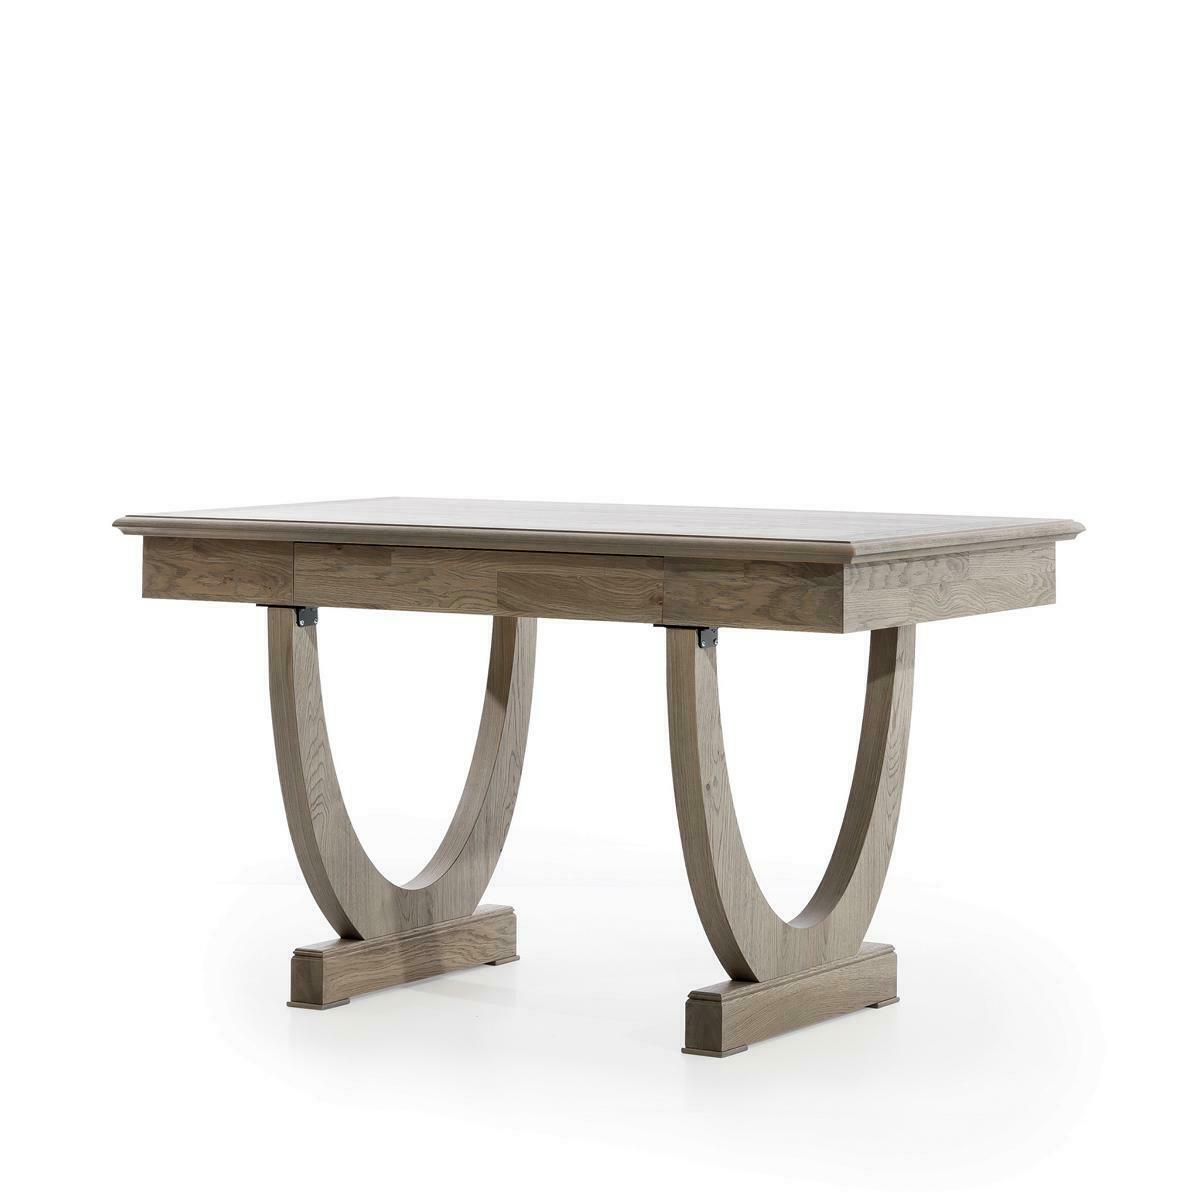 Design table secretary luxury writing office furniture tables wood desks 140x78, model -  CE-1